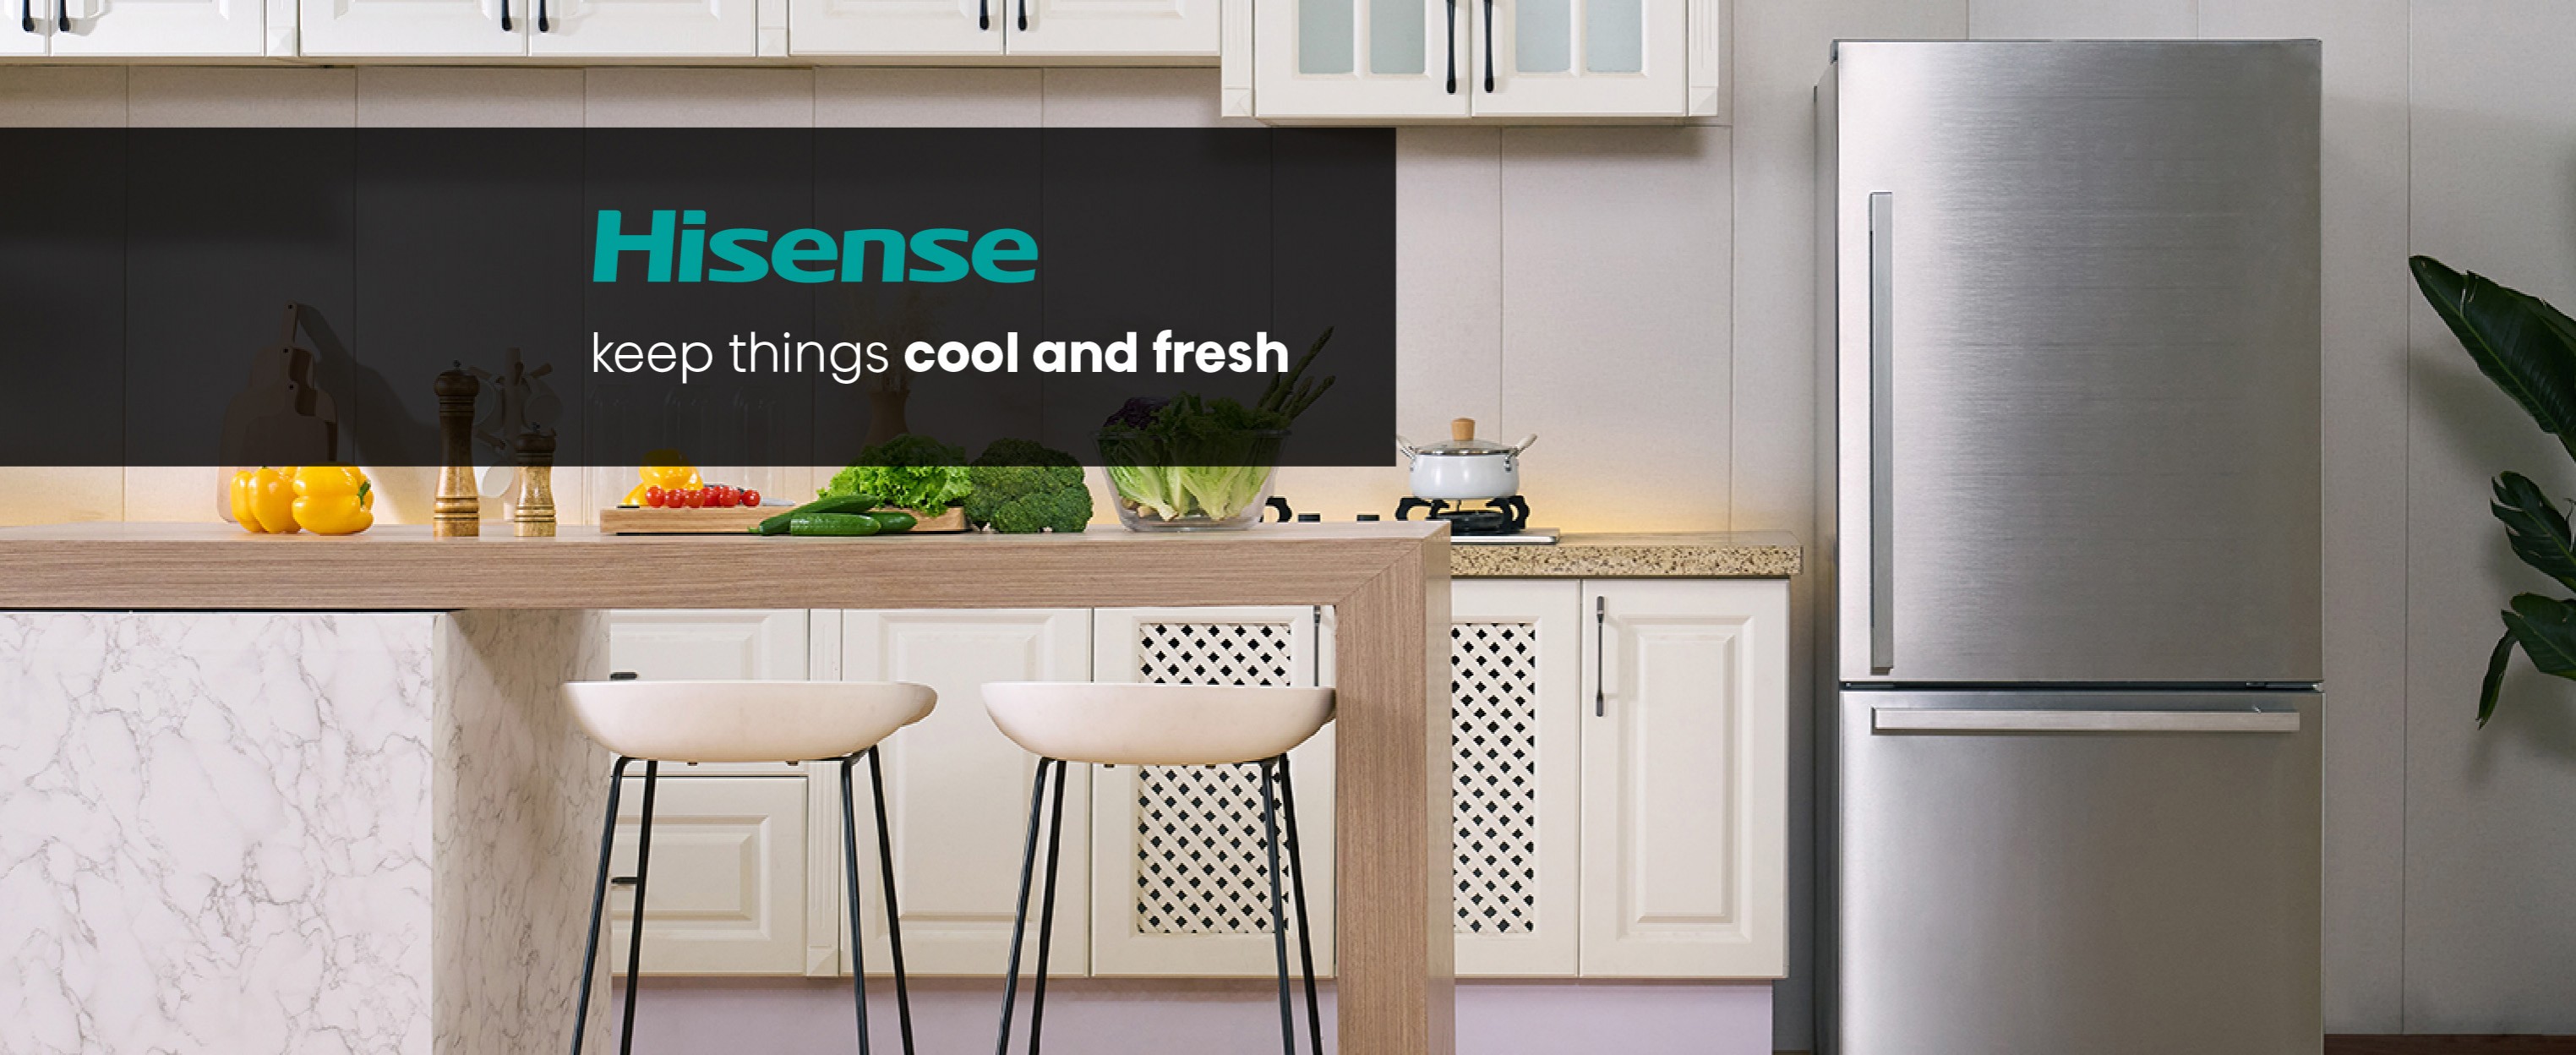 Hisense keep things cool and fresh